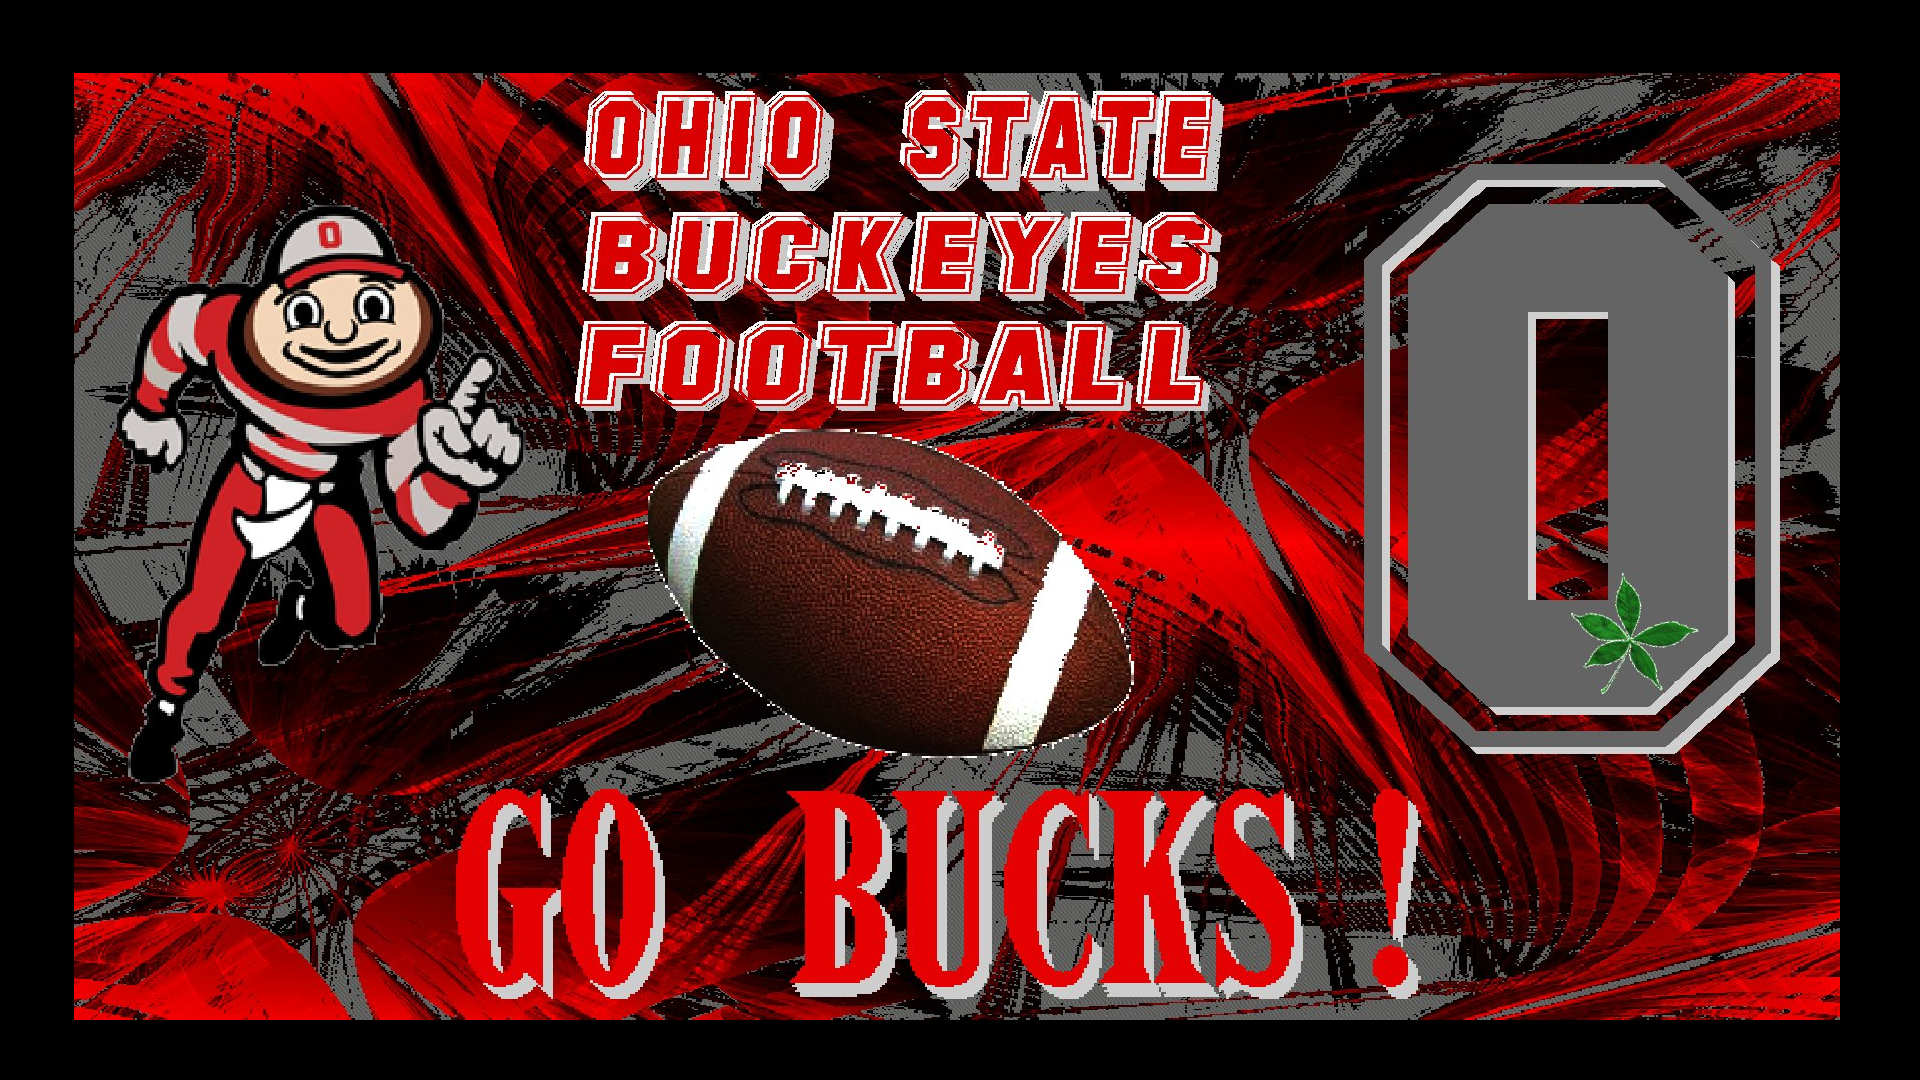 OHIO STATE BUCKEYES FOOTBALL, GO BUCKS! - Ohio State Football ...